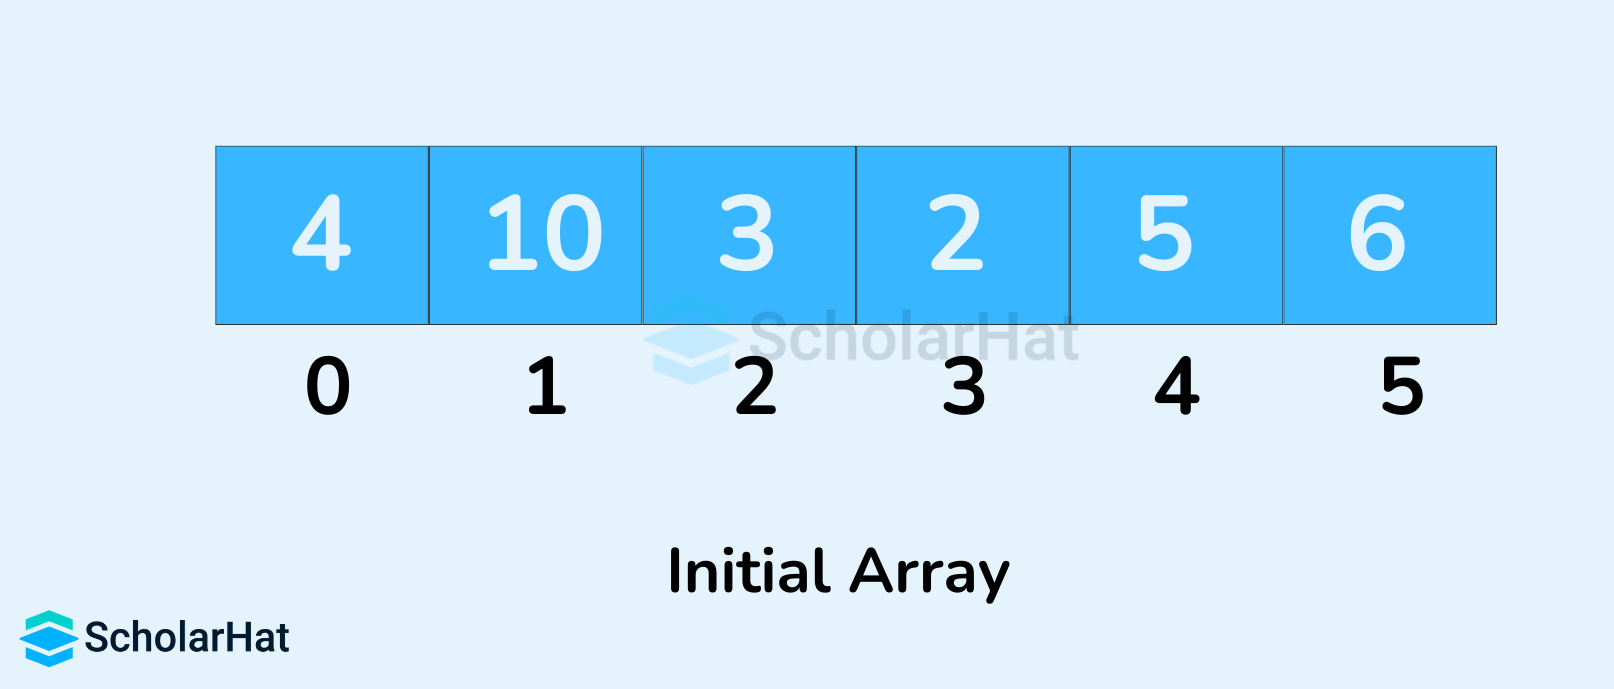  input array